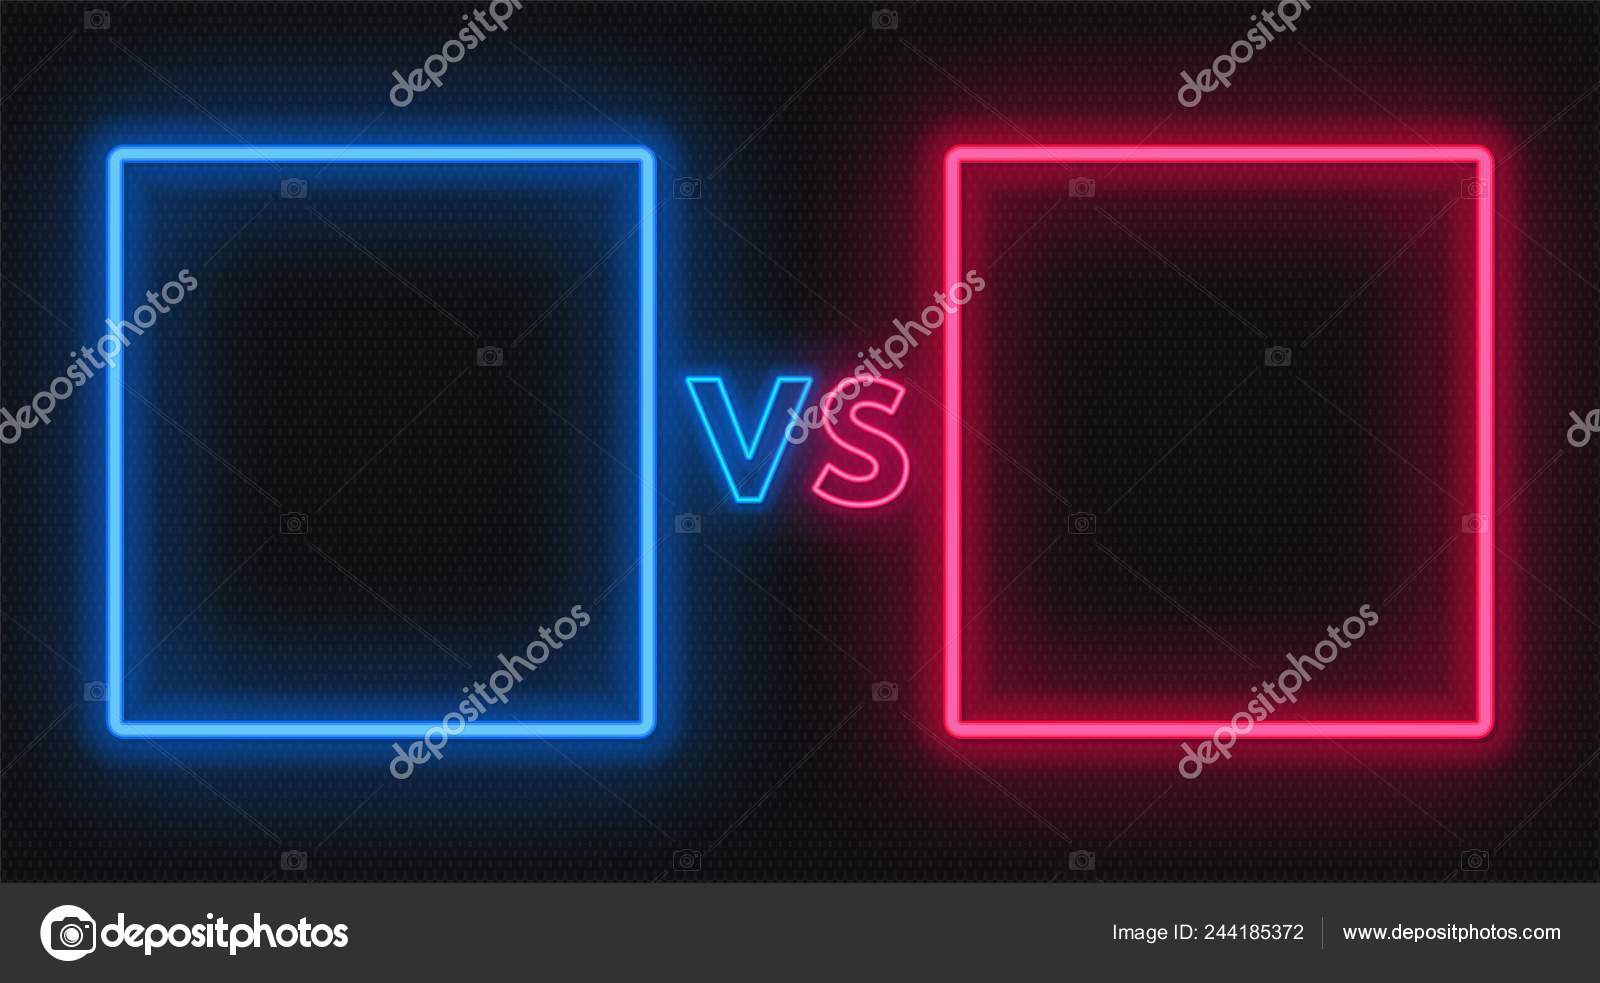 Versus battle business confrontation screen Vector Image